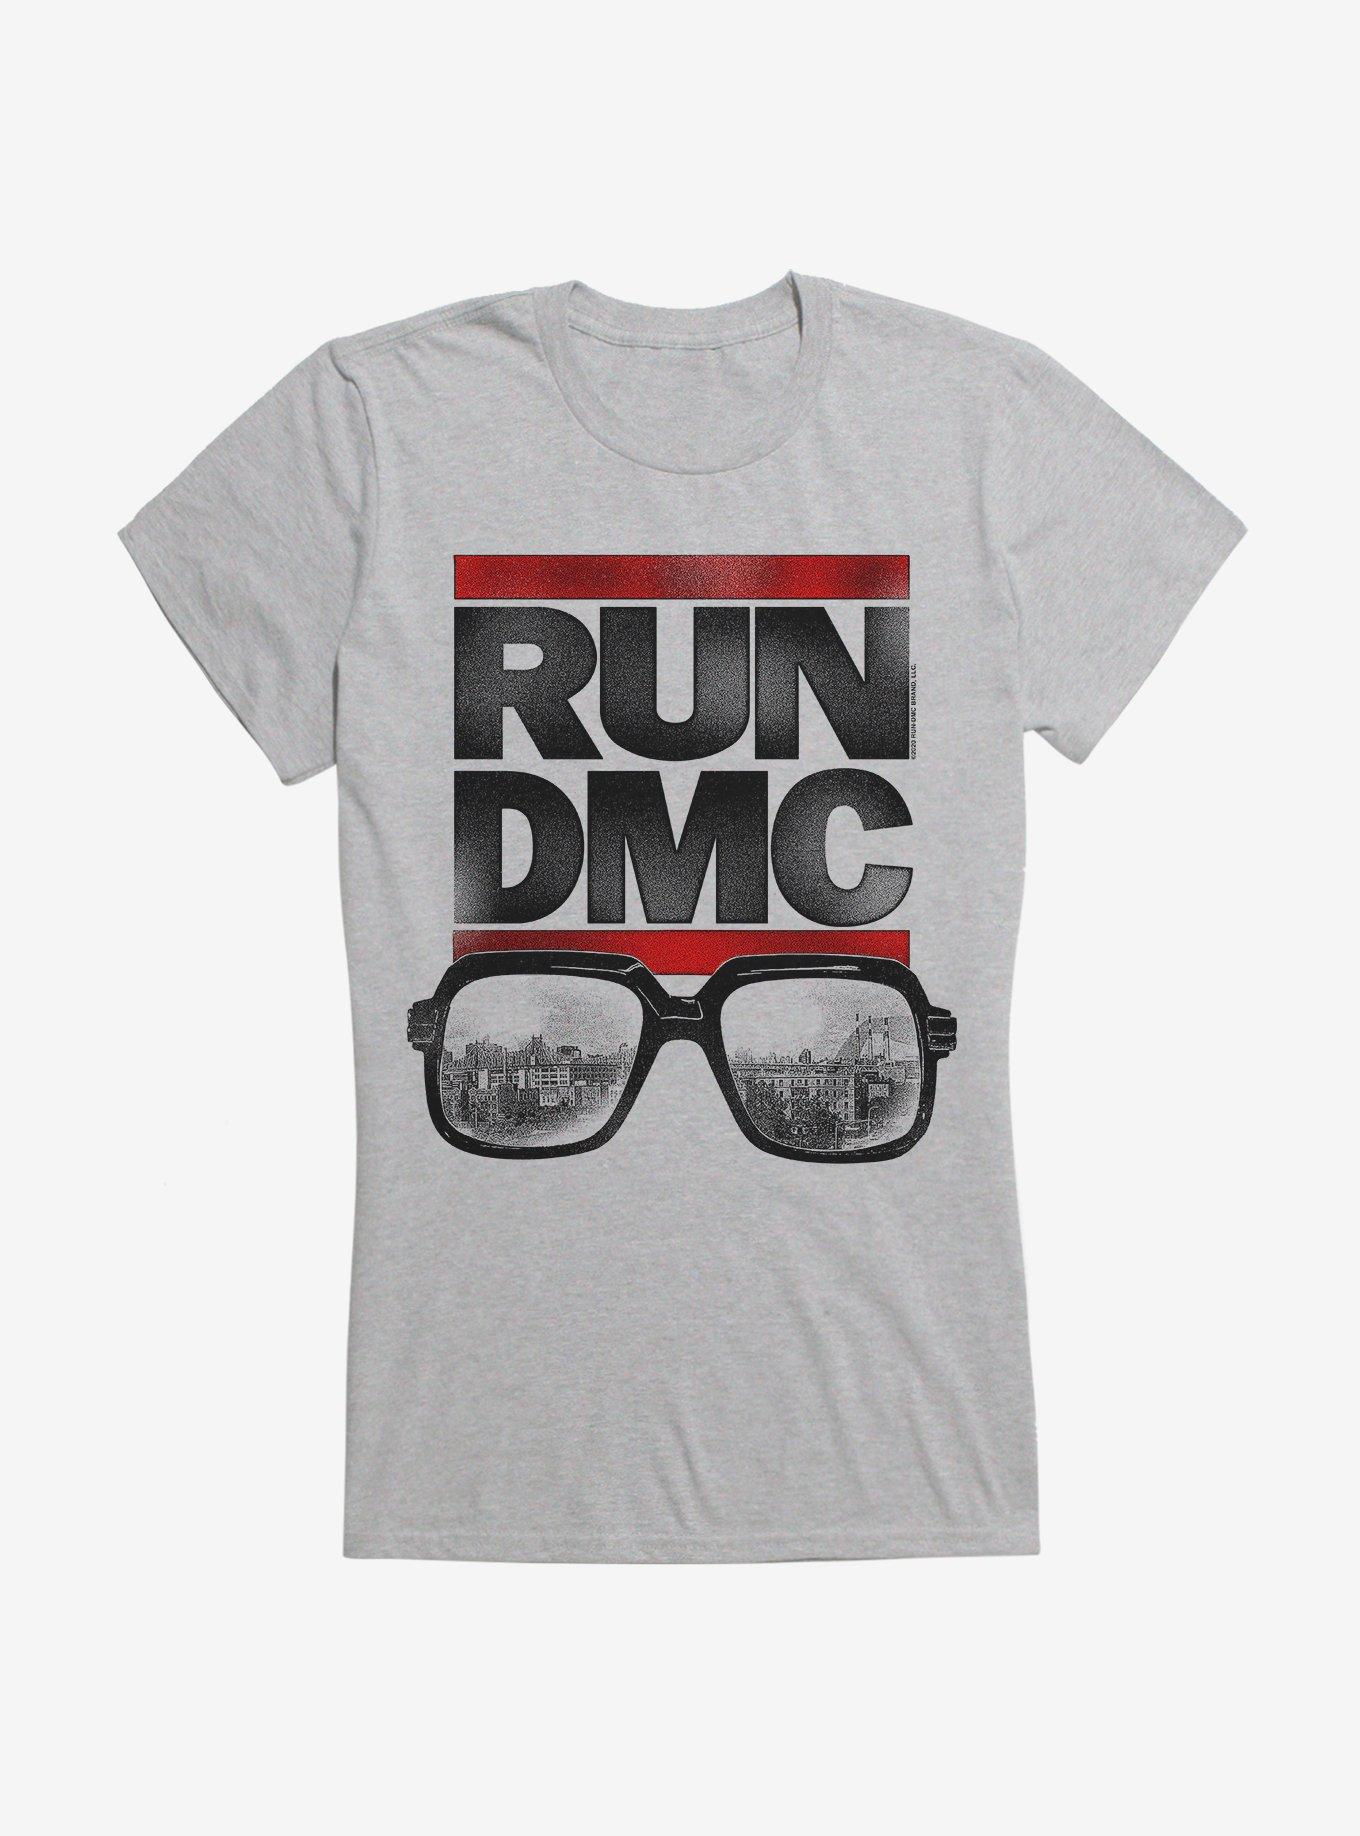 Run DMC NY Cityscape Glasses Girls T-Shirt